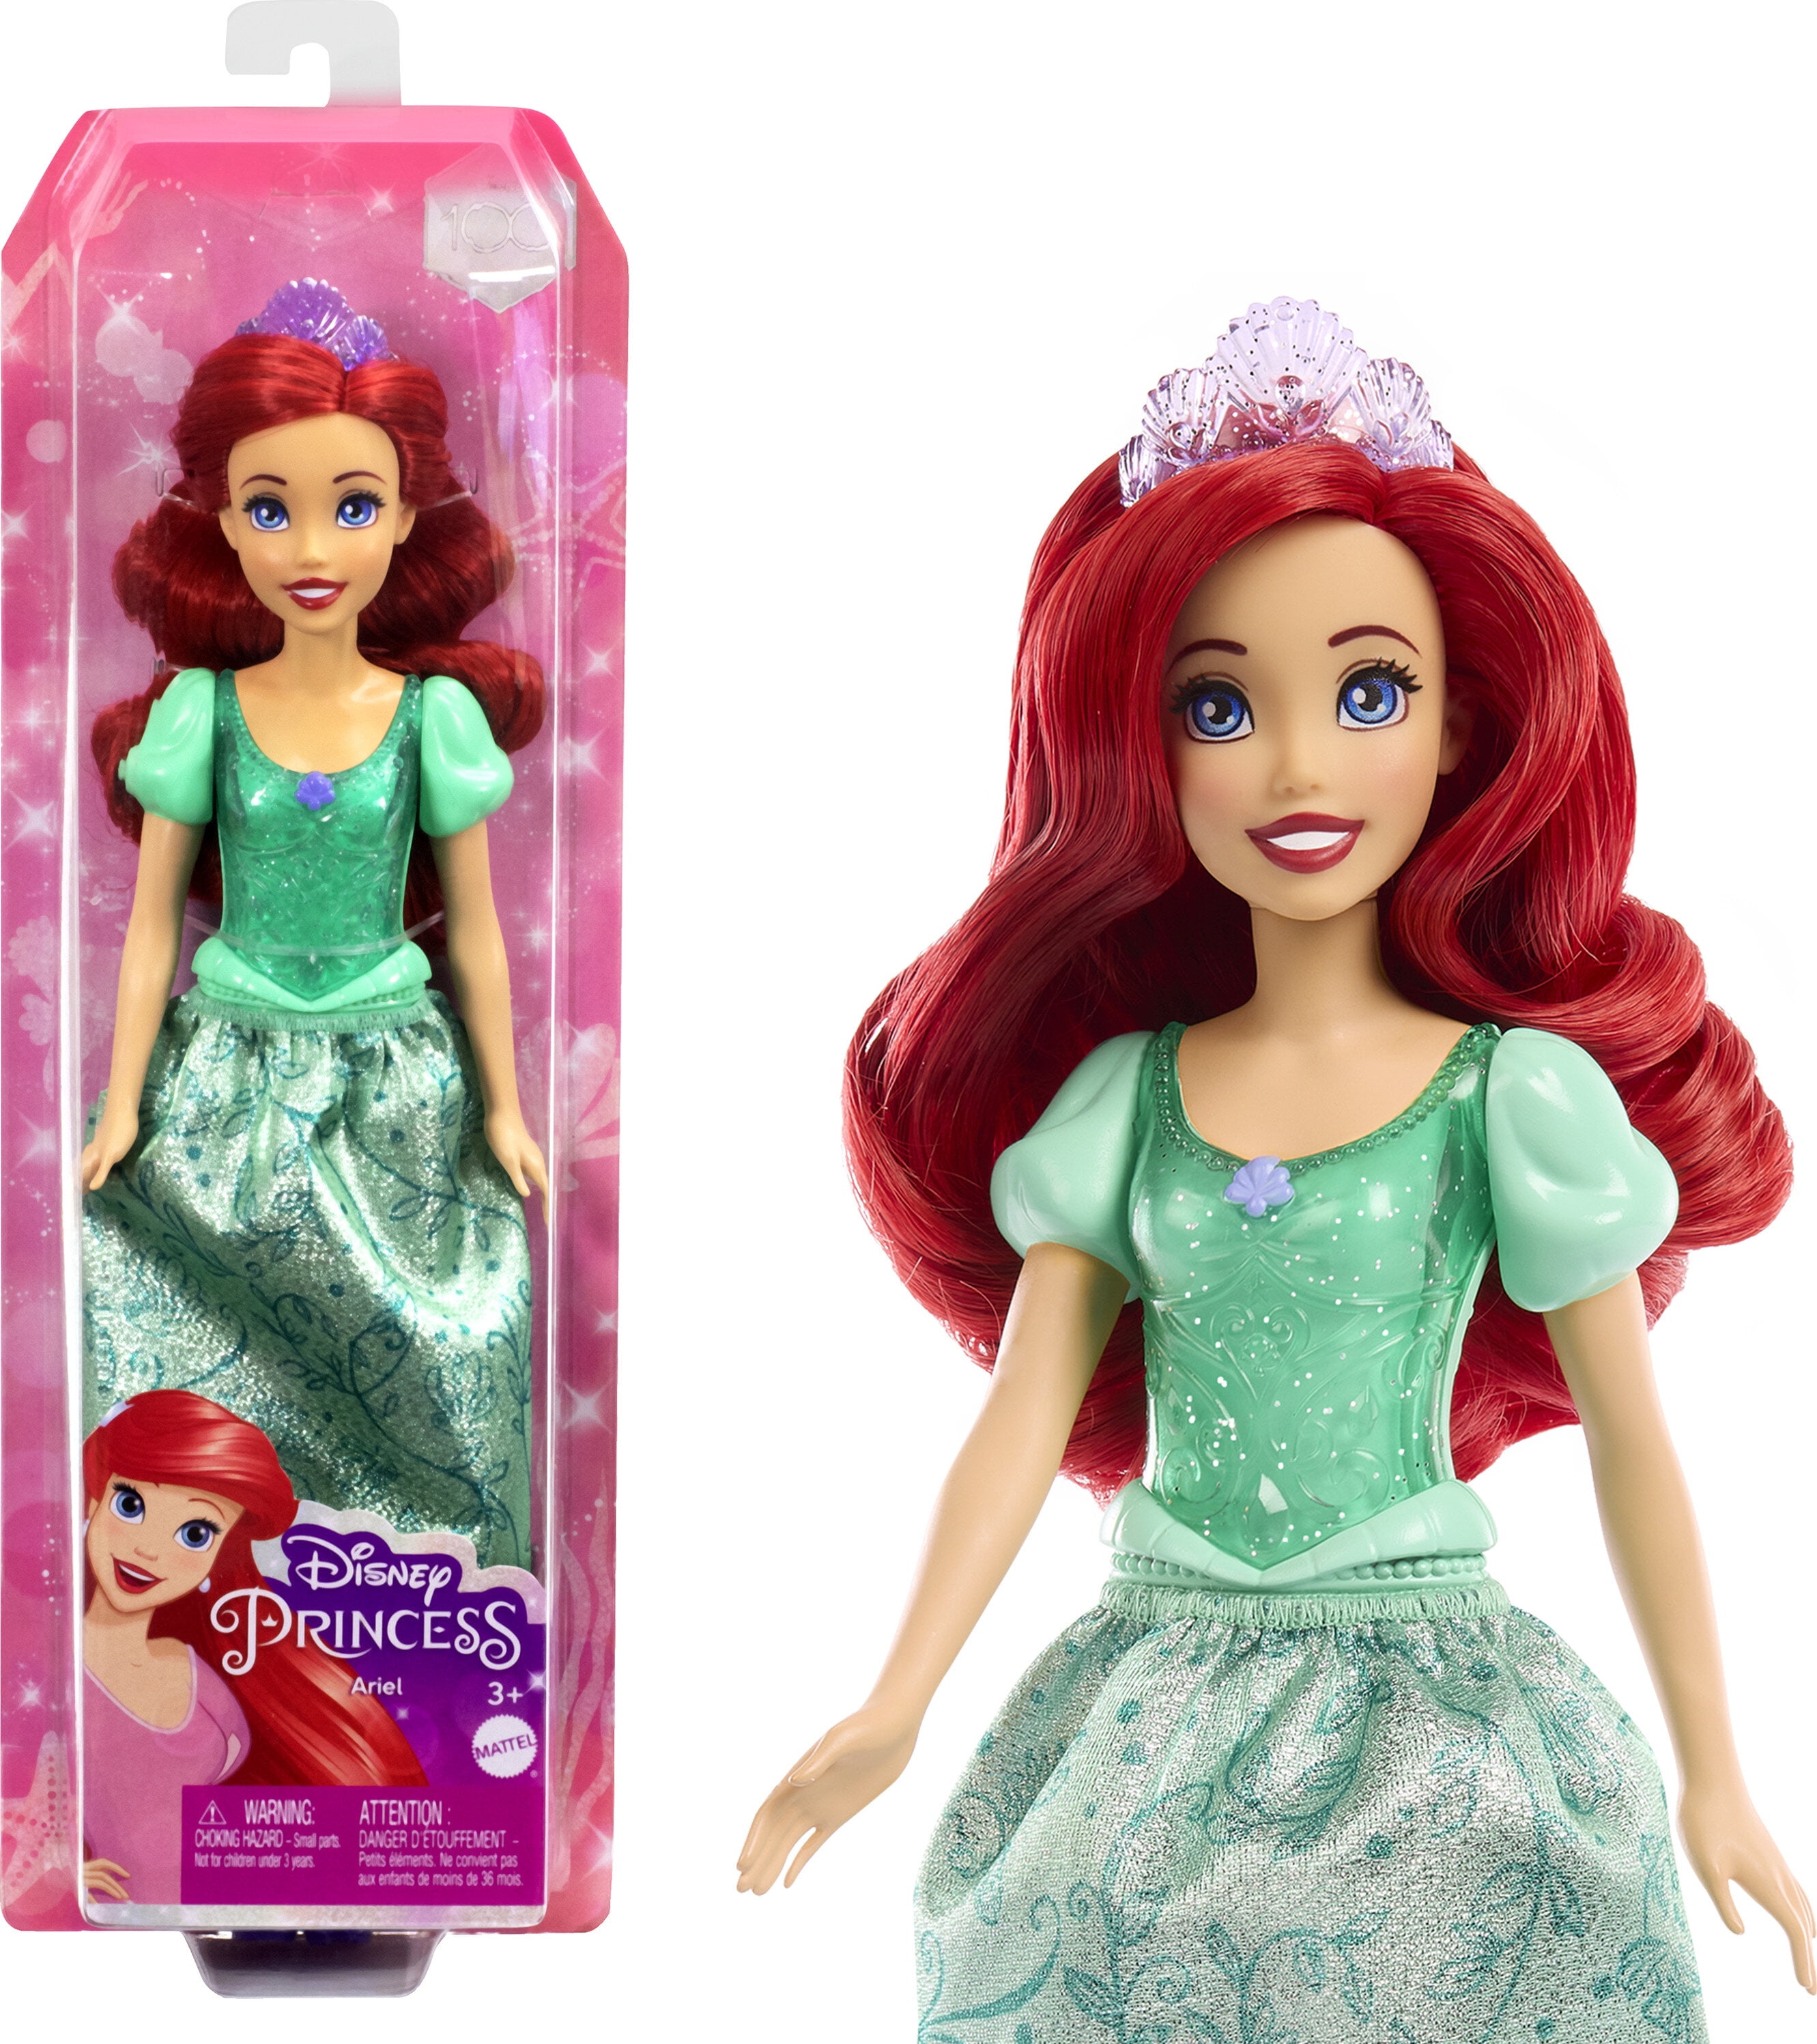 Funko Pop! Princesa Da Disney Série Ariel RapunZzel Belle Cinderlla Tiana  Vinil Brinquedos Action Figure Modelo Bonecas Brinquedos De Design, Bolive